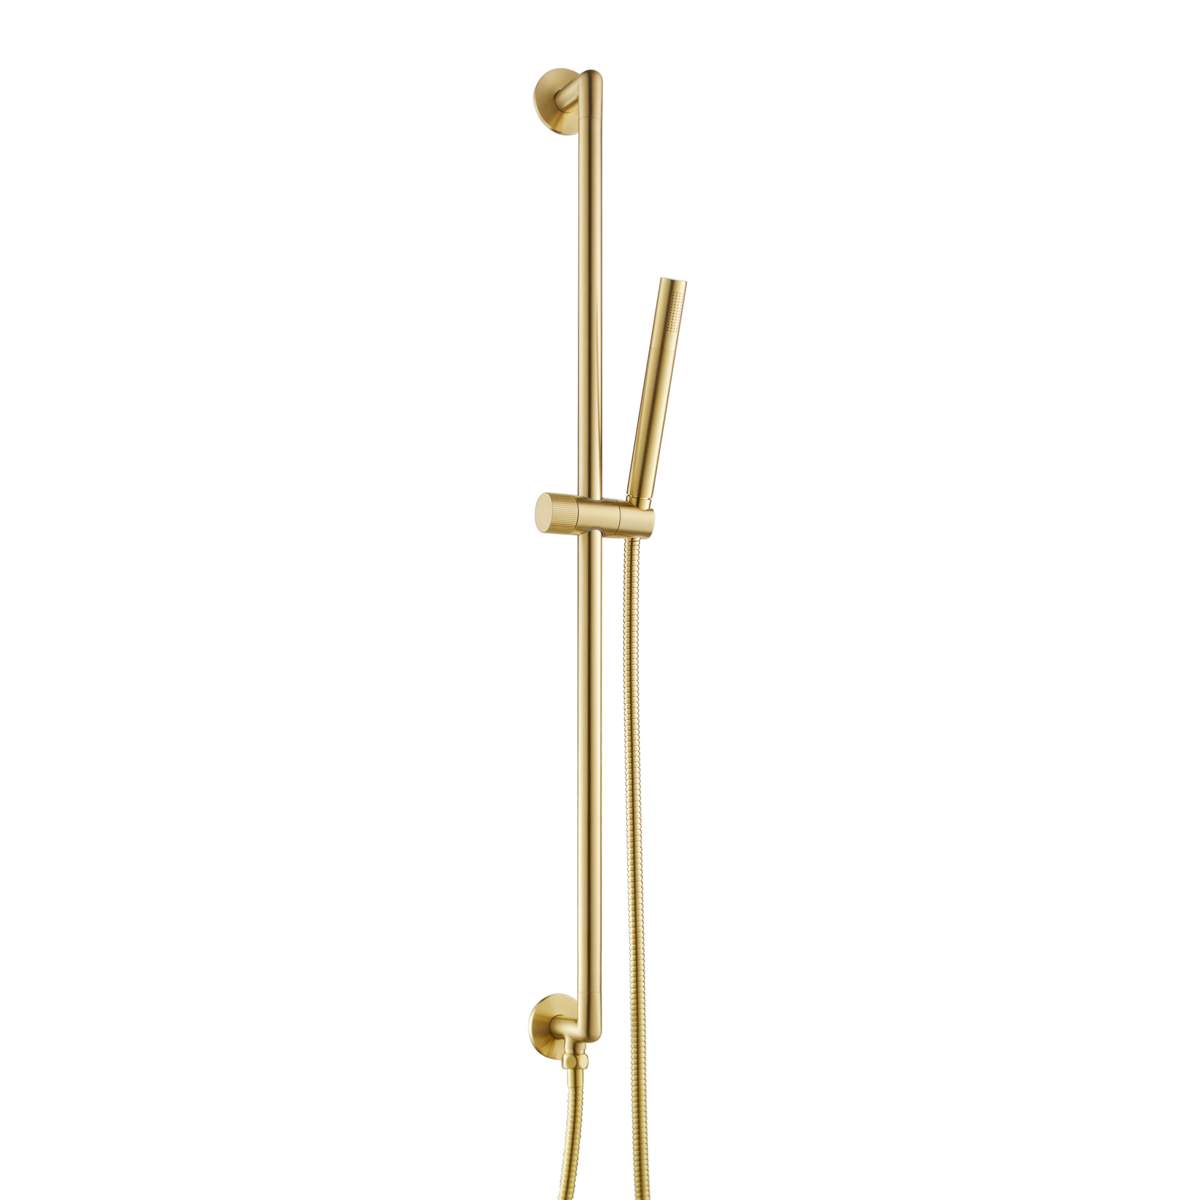 JTP Evo Brushed Brass Slide Rail with Pencil Shower Handle and Hose